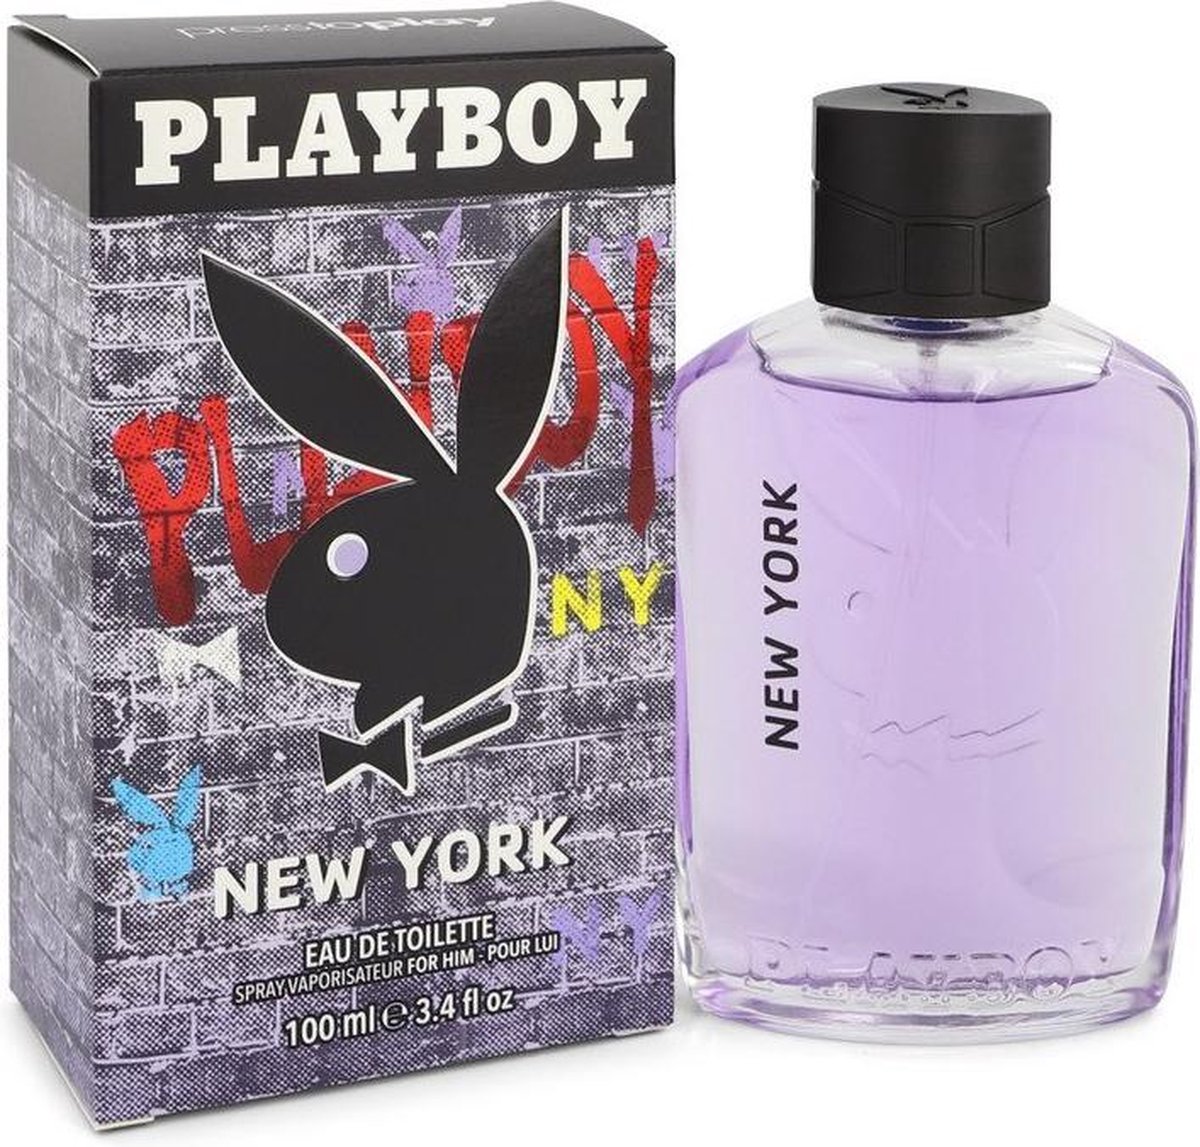 Playboy New York Eau De Toilette Spray 100ml